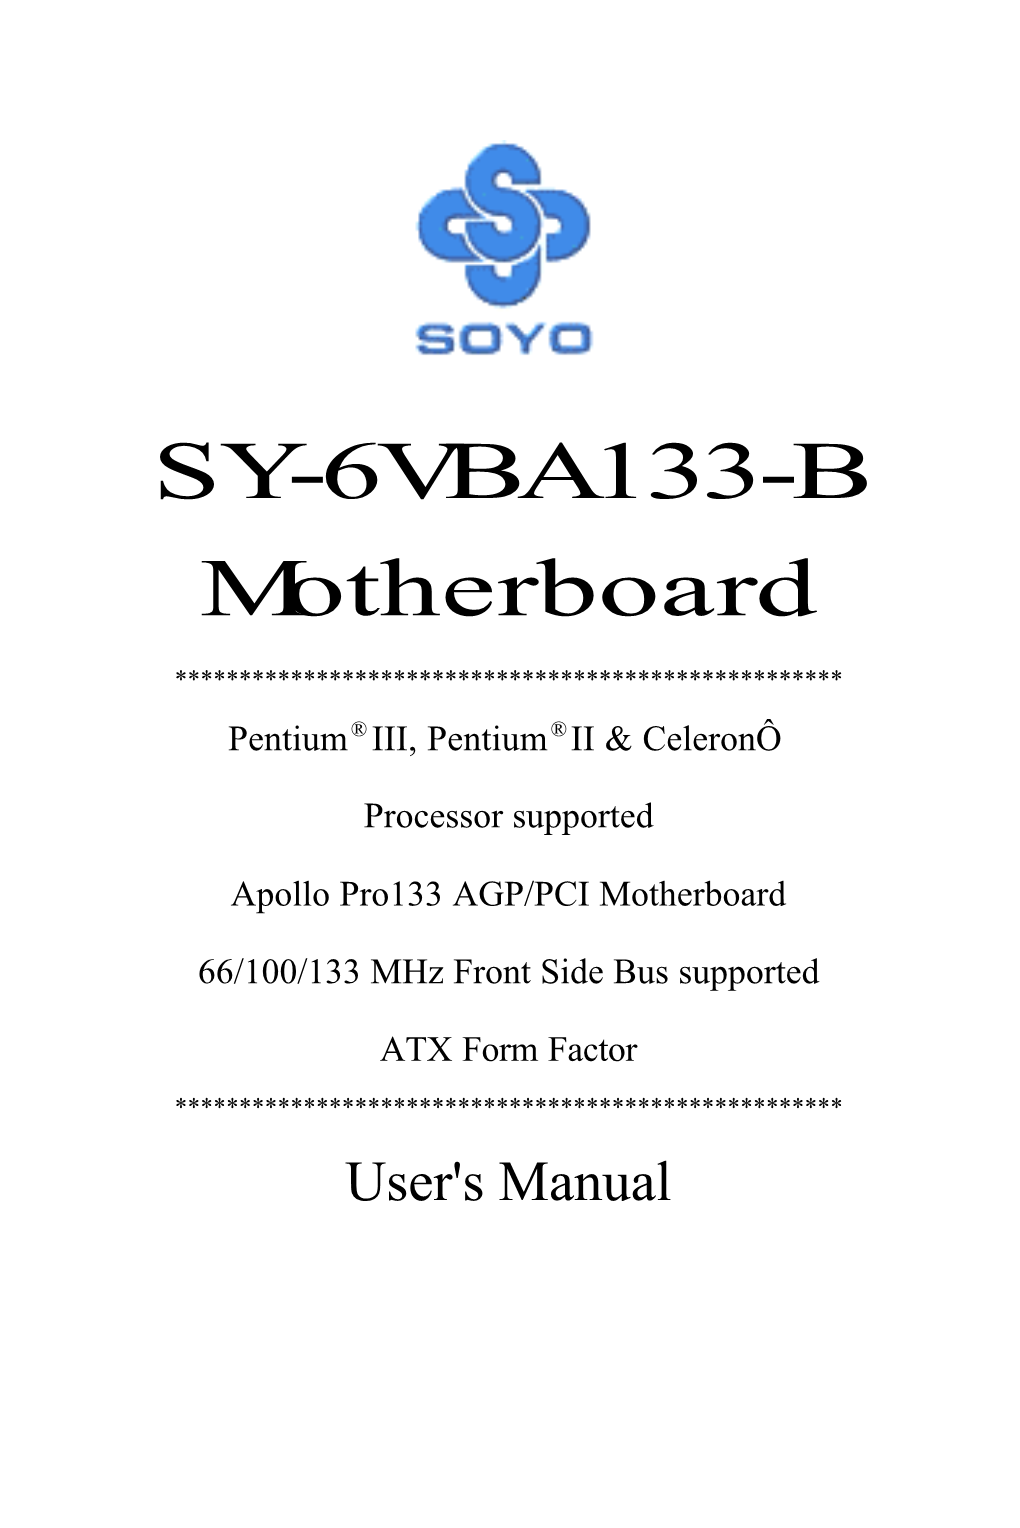 SY-6VBA133-B Motherboard